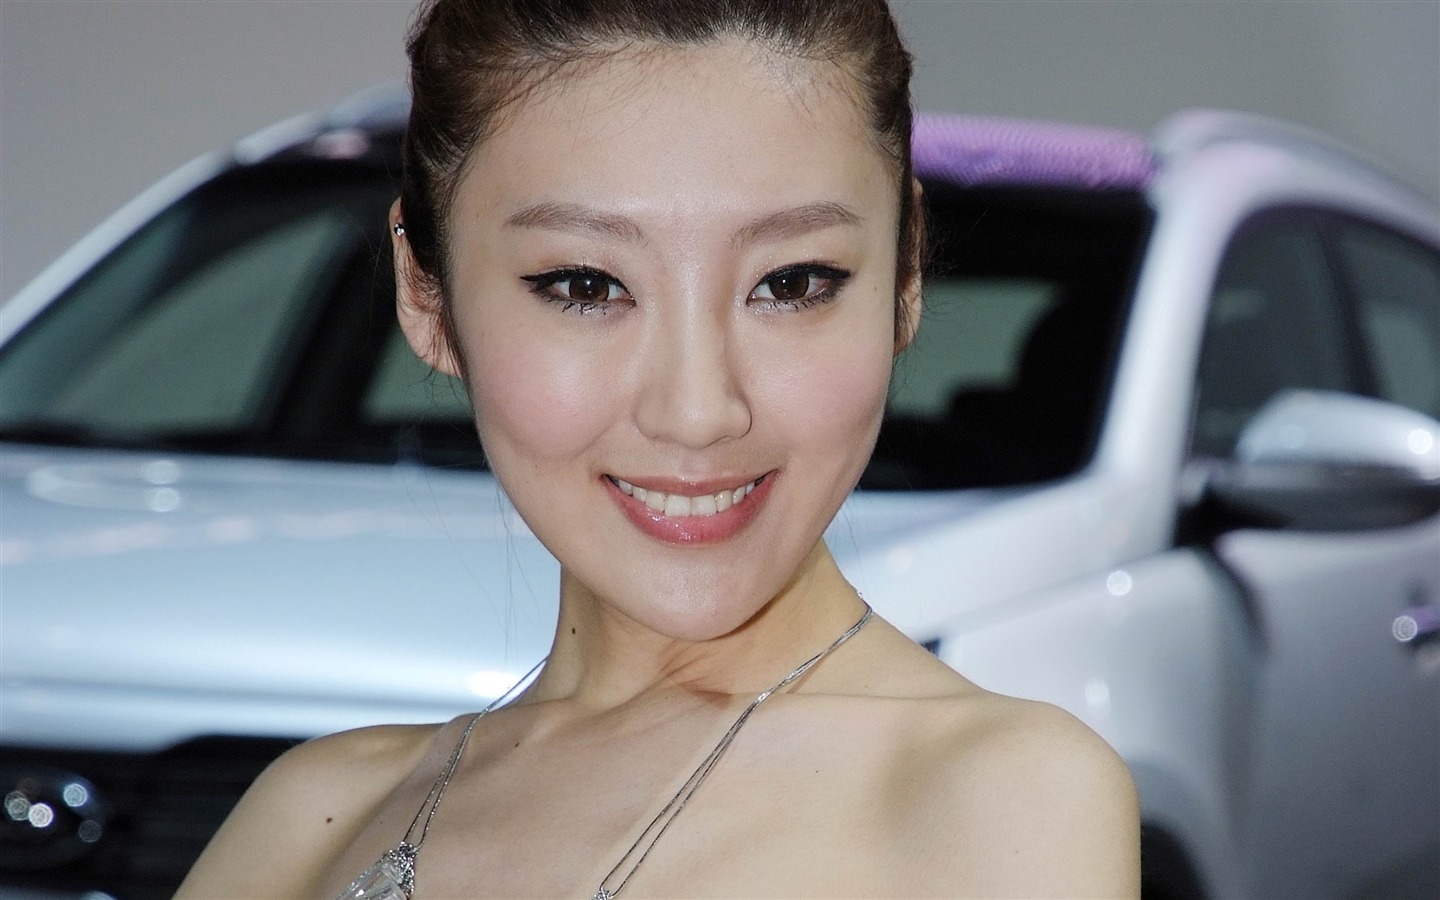 2010 Beijing International Auto Show beauty (rebar works) #24 - 1440x900